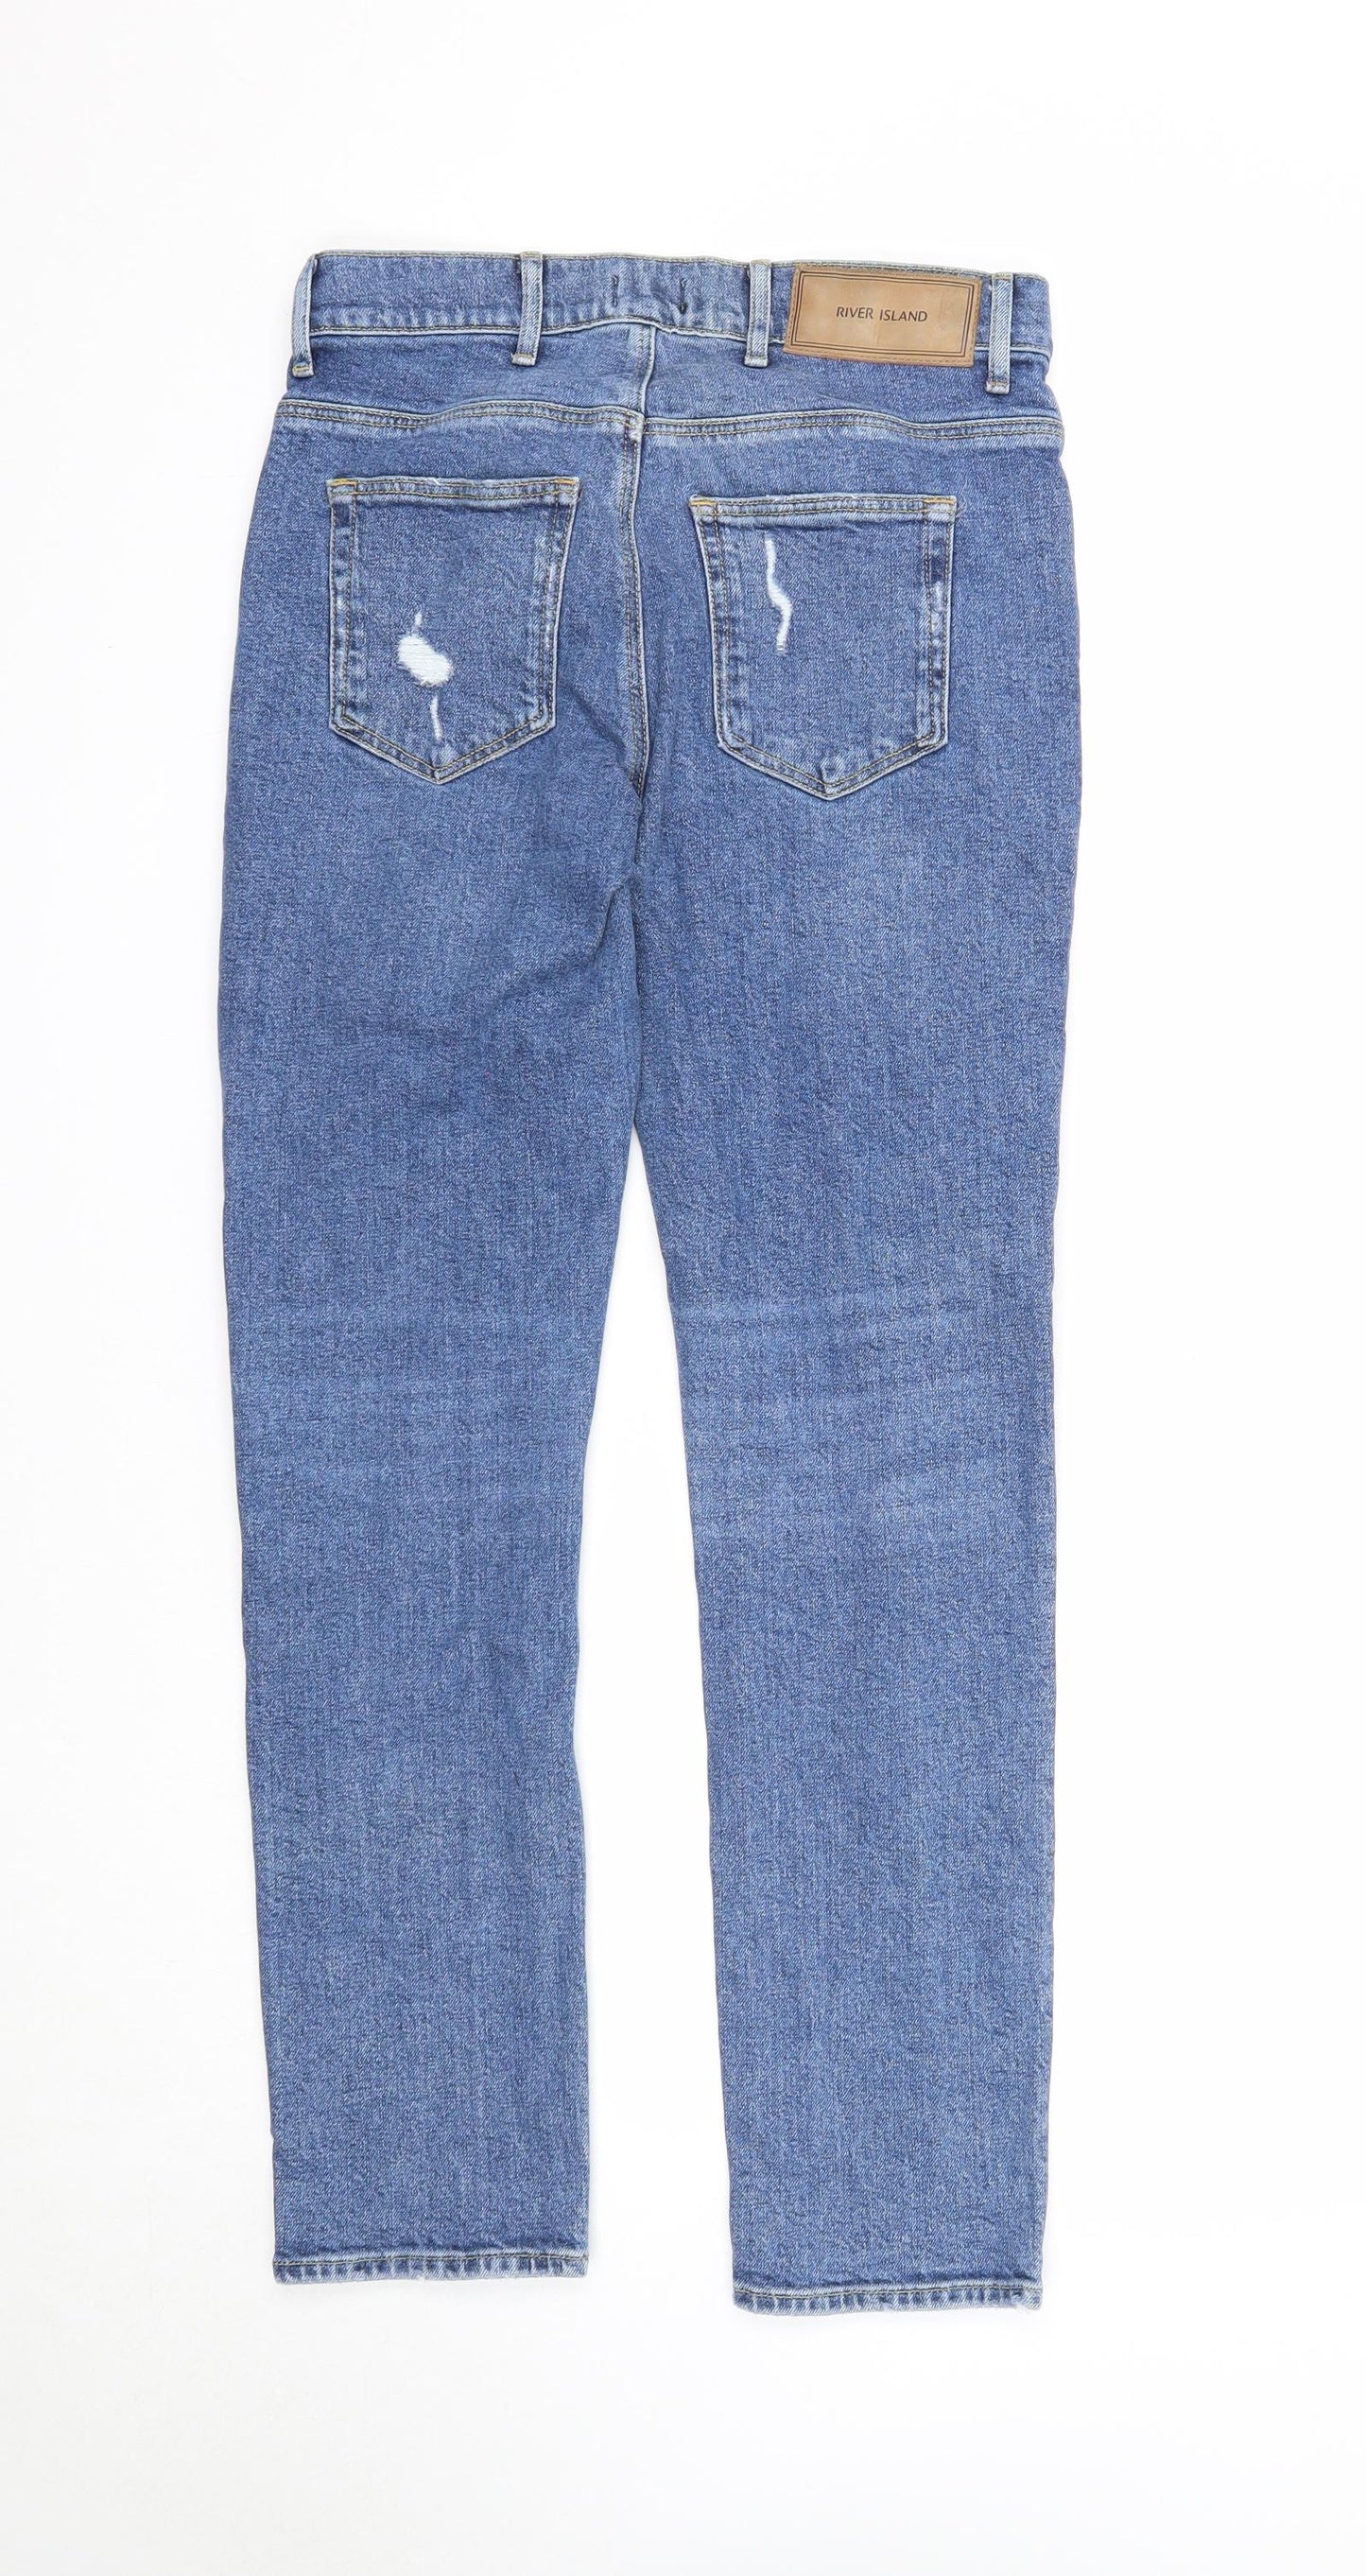 River Island Mens Blue Cotton Skinny Jeans Size 28 in L30 in Regular Zip